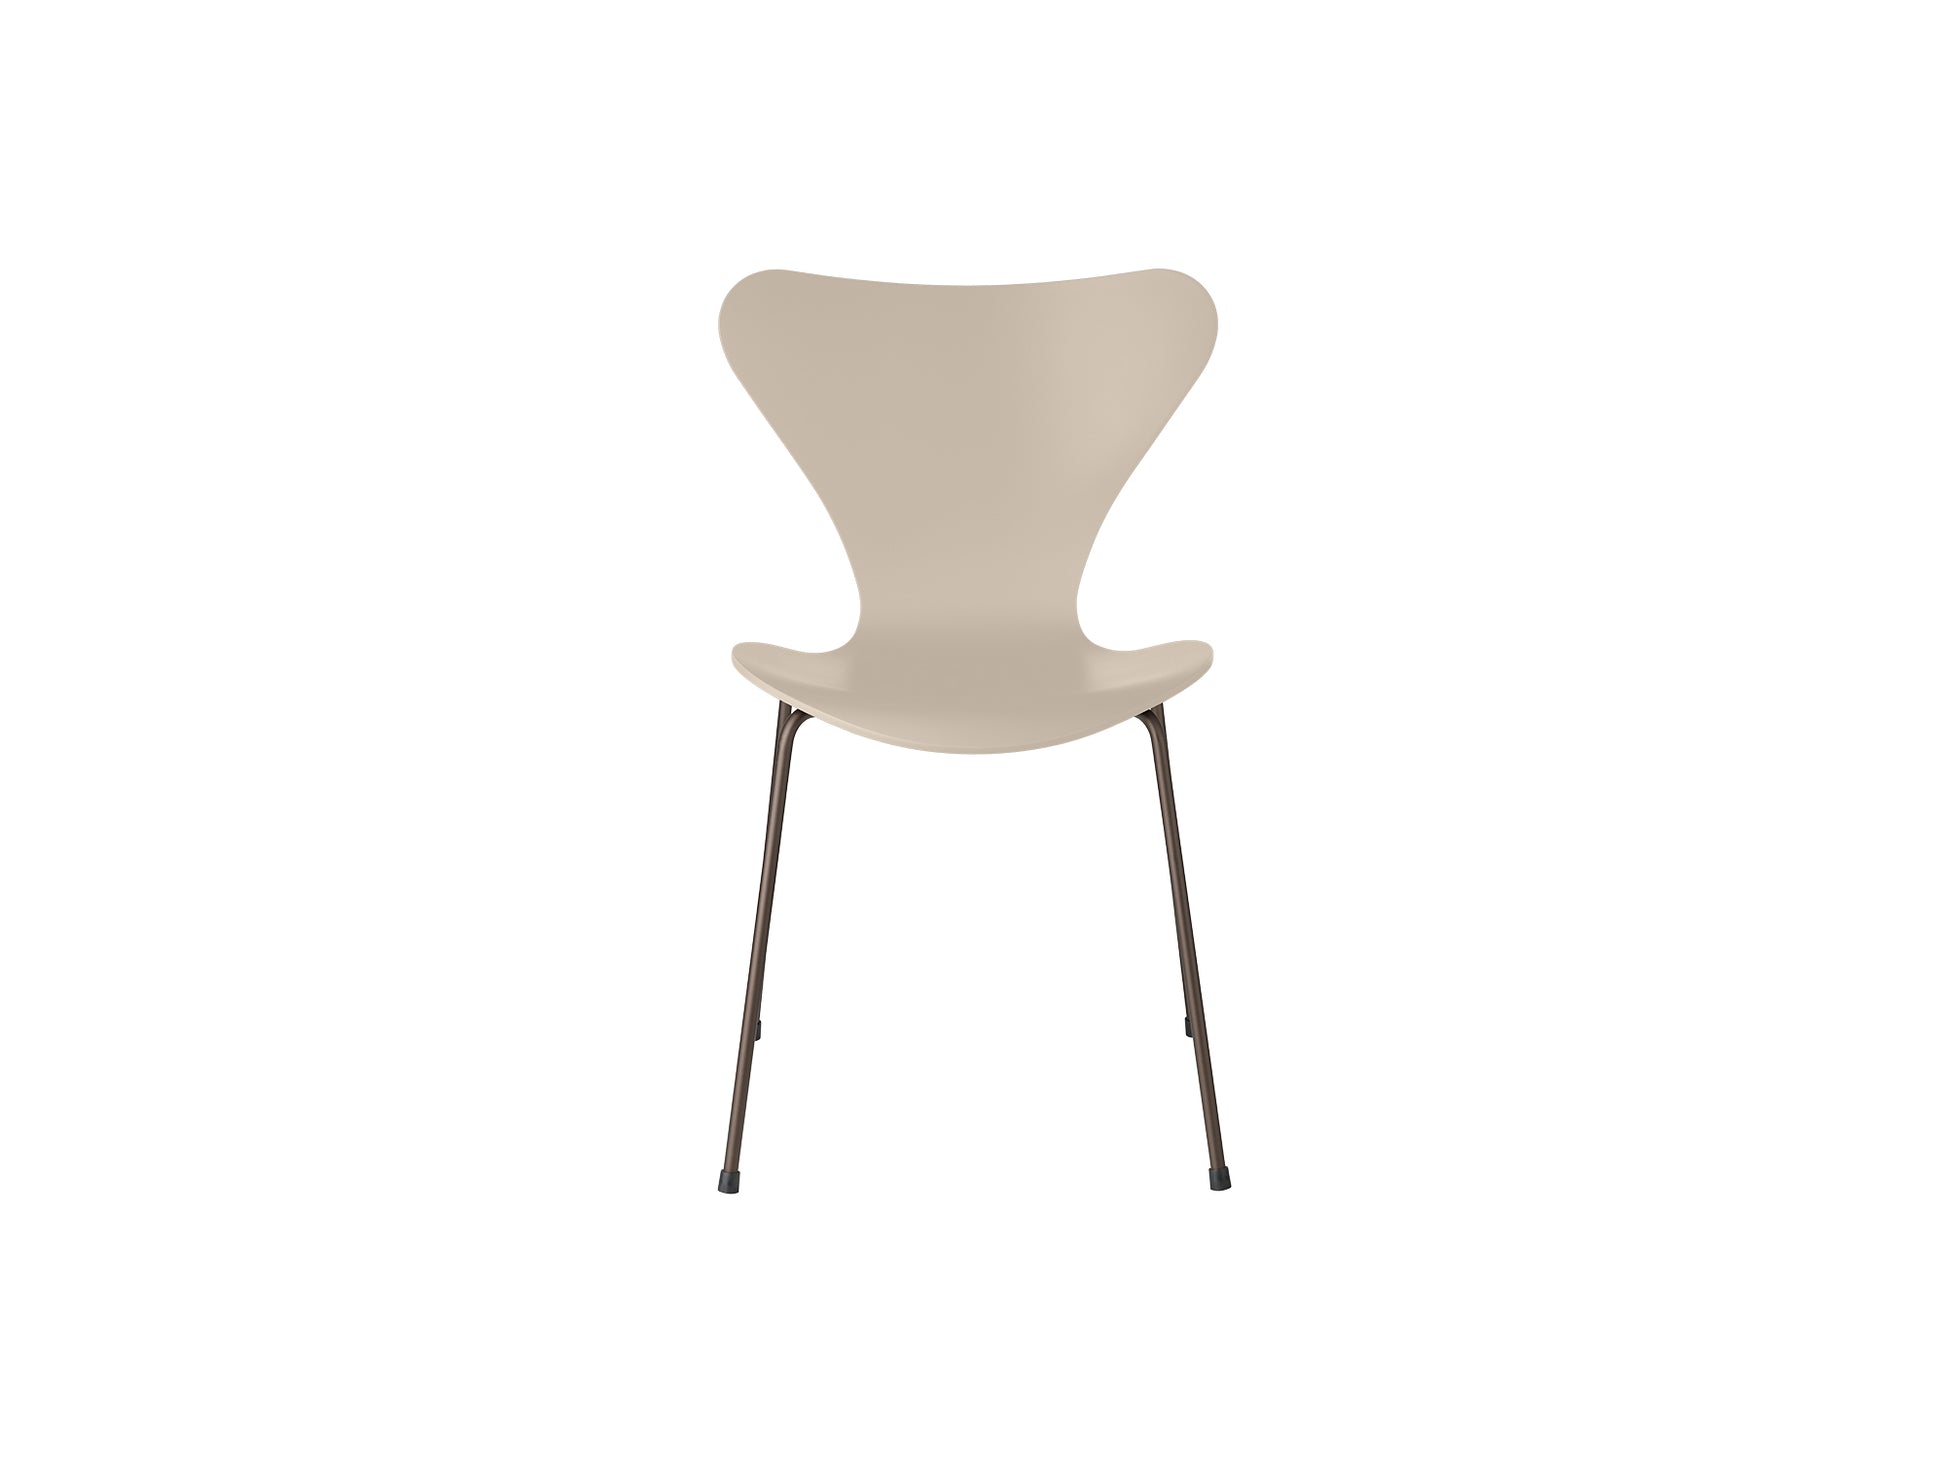 Series 7™ 3107 Dining Chair by Fritz Hansen - Light Beige Lacquered Veneer Shell / Brown Bronze Steel